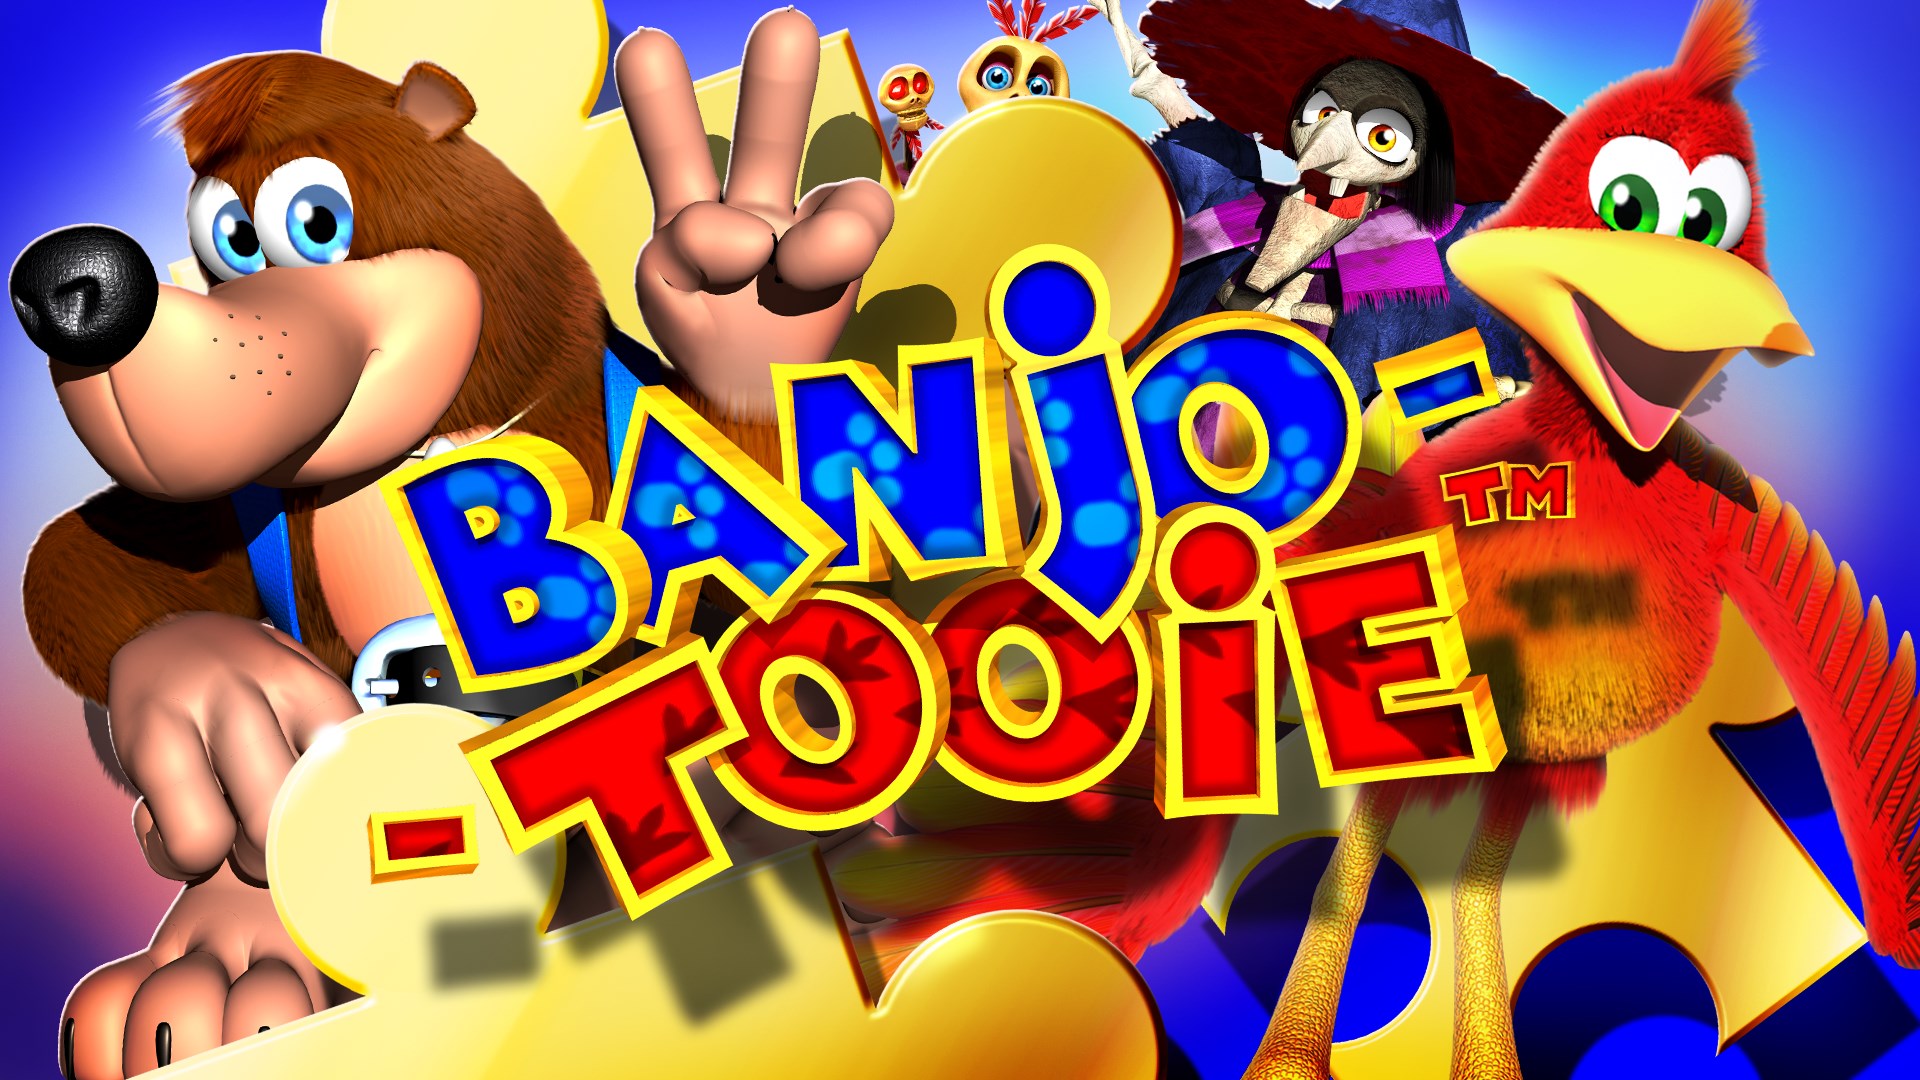 Buy Banjo-Kazooie